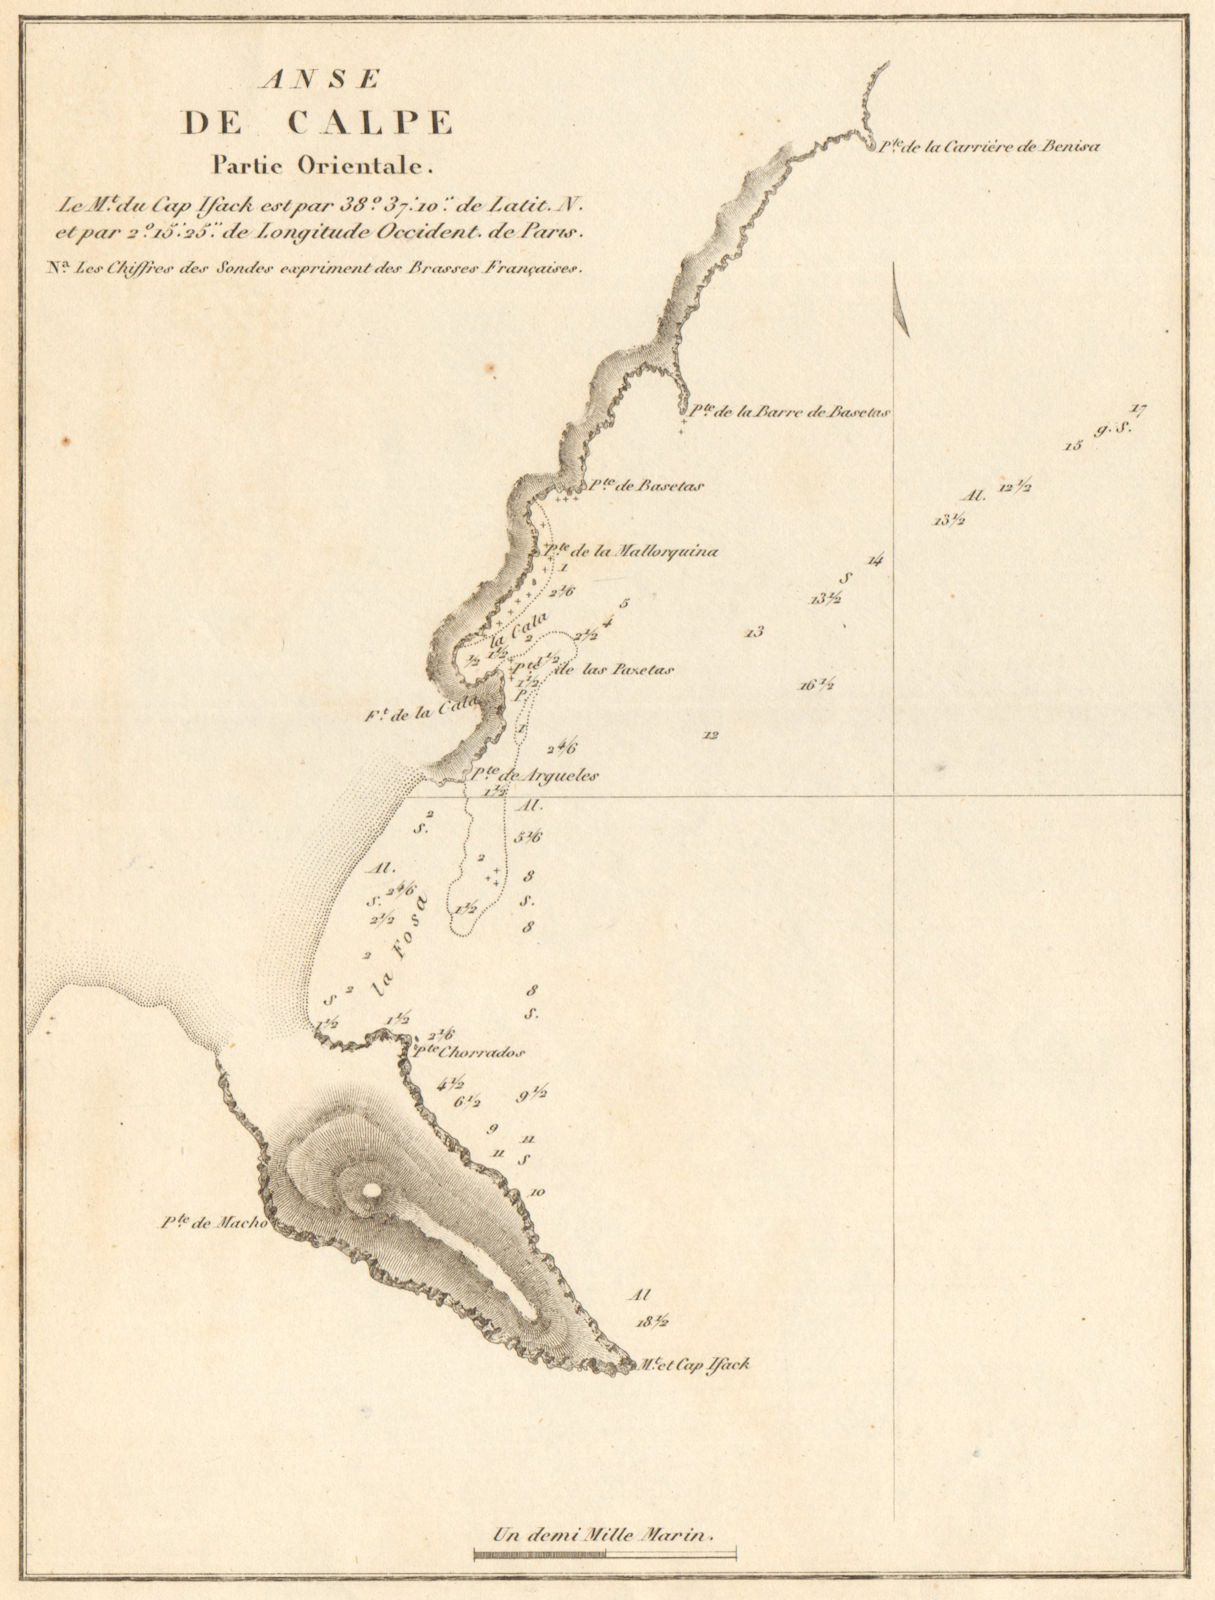 Calp Bay. 'Anse de Calpe partie Orientale'. Spain. Alicante. GAUTTIER 1851 map